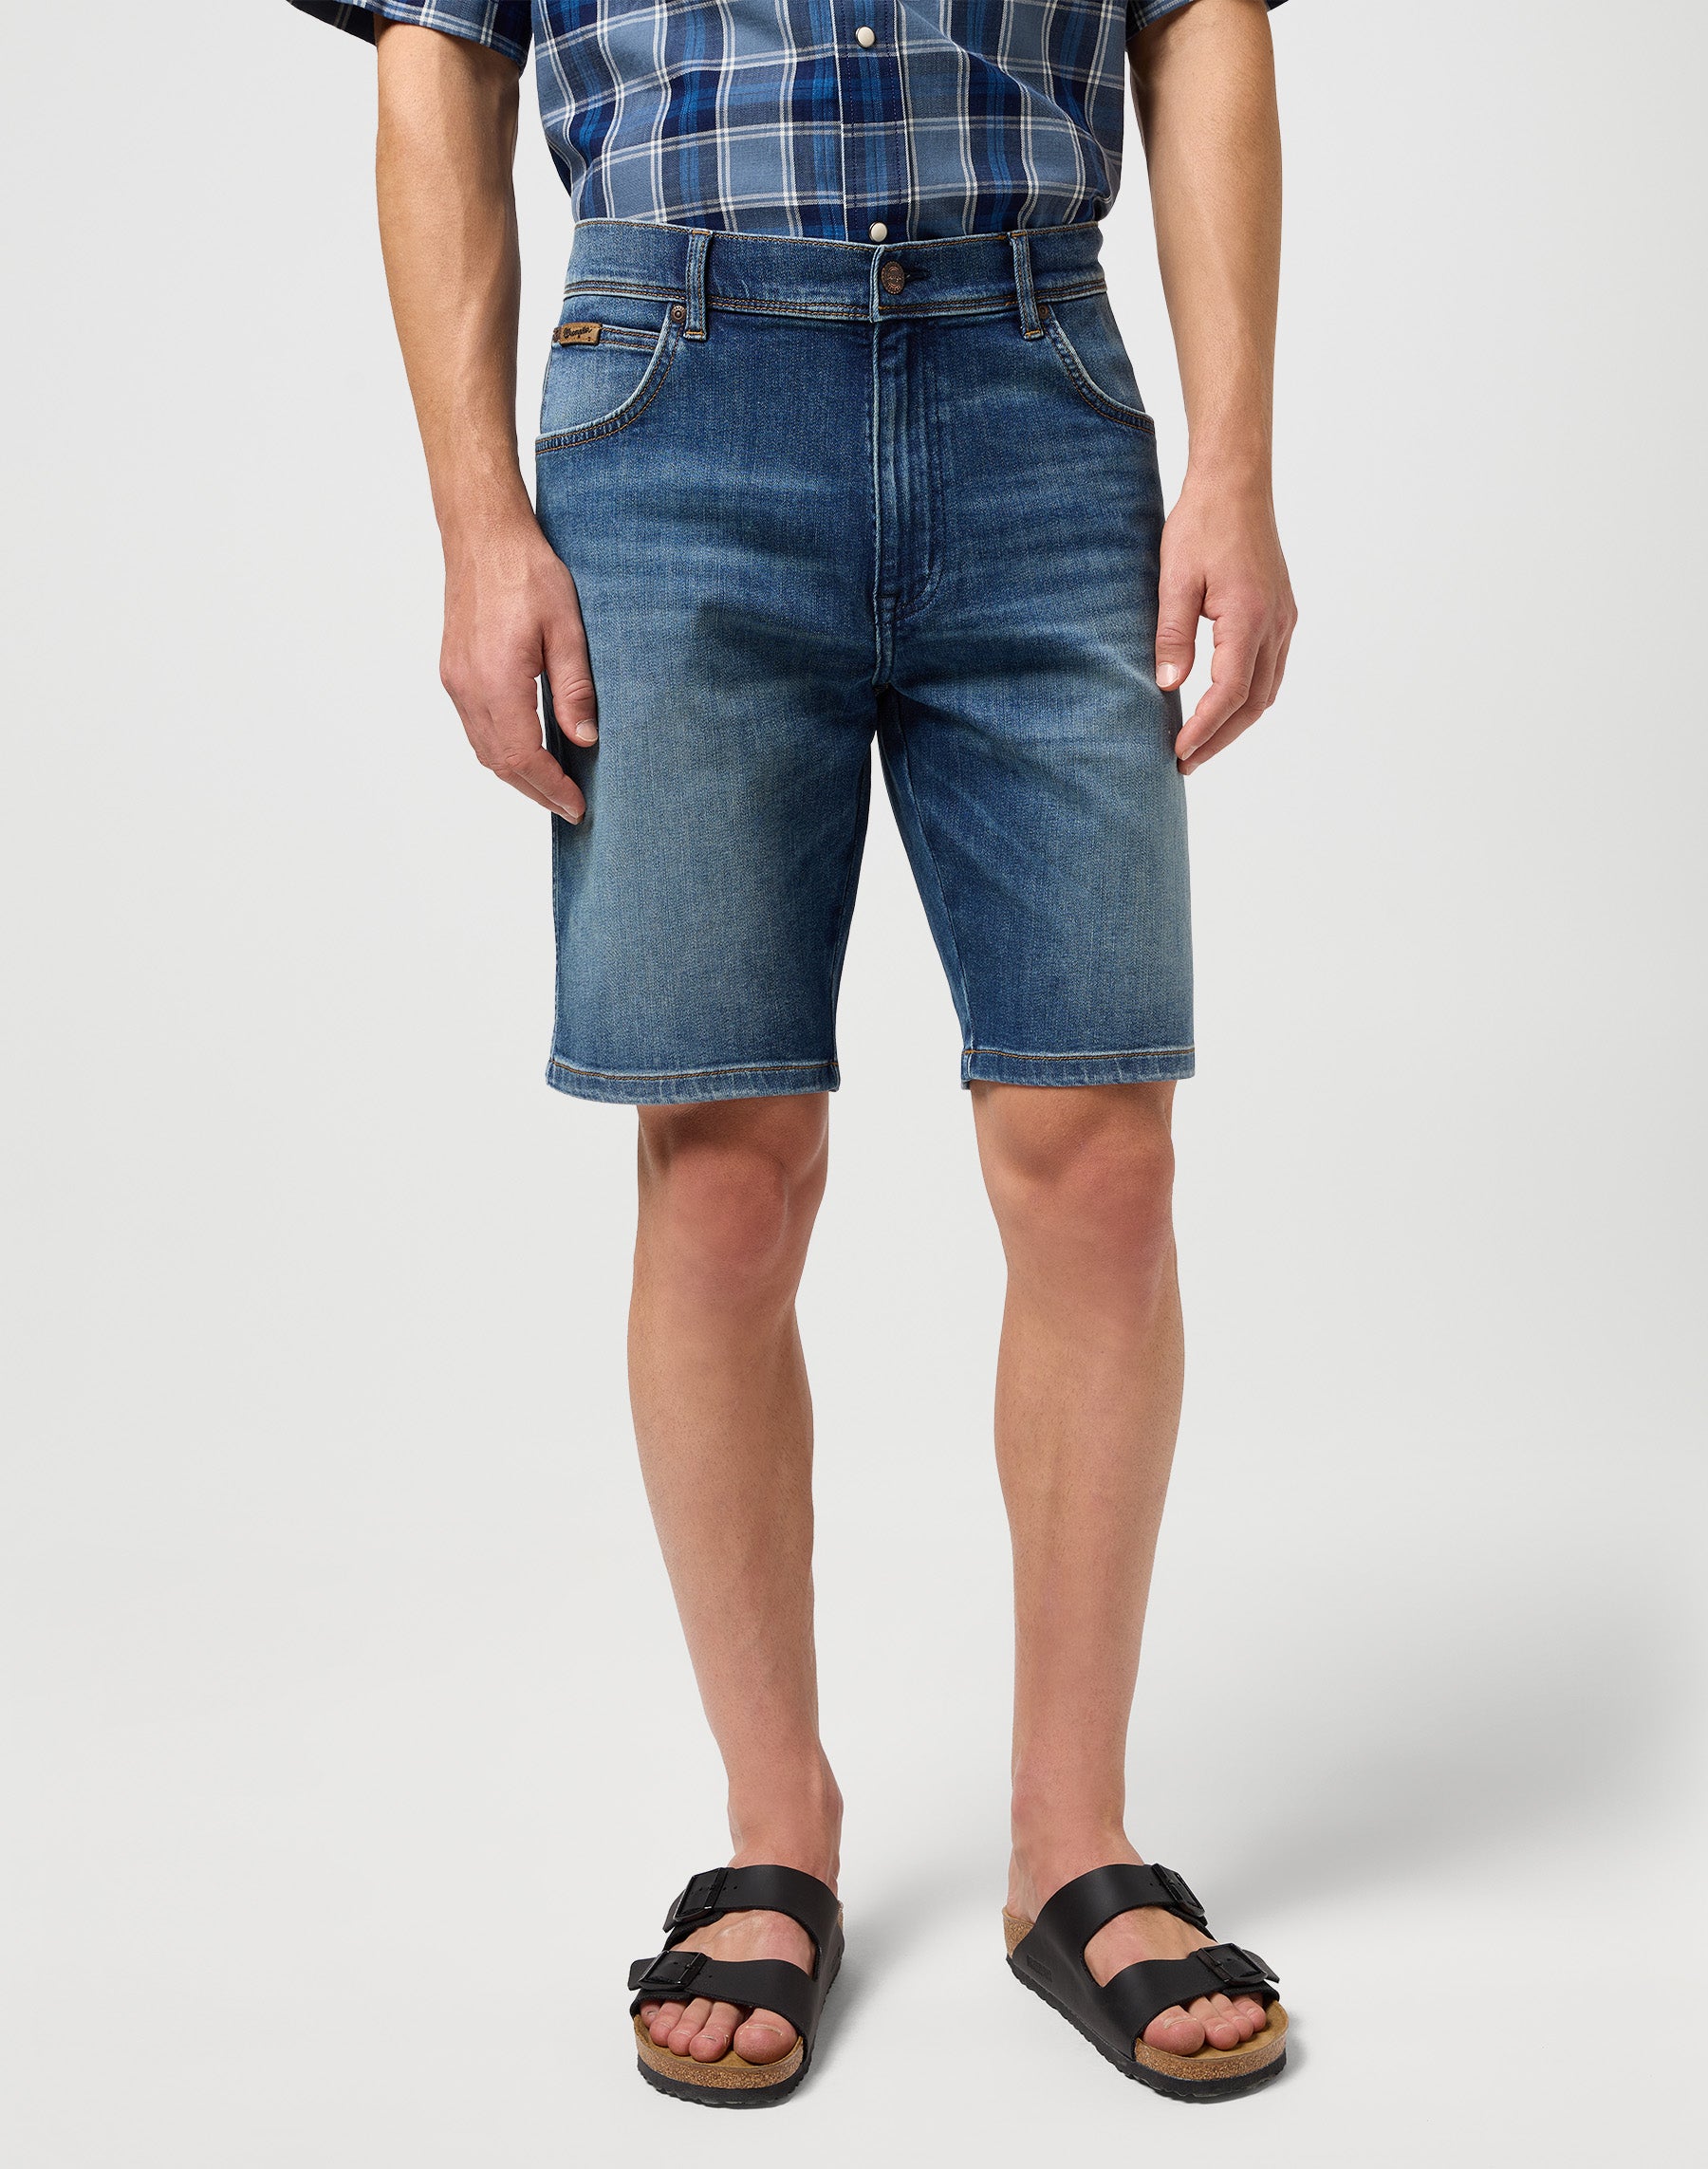 Texas Shorts in Hare Jeansshorts Wrangler   